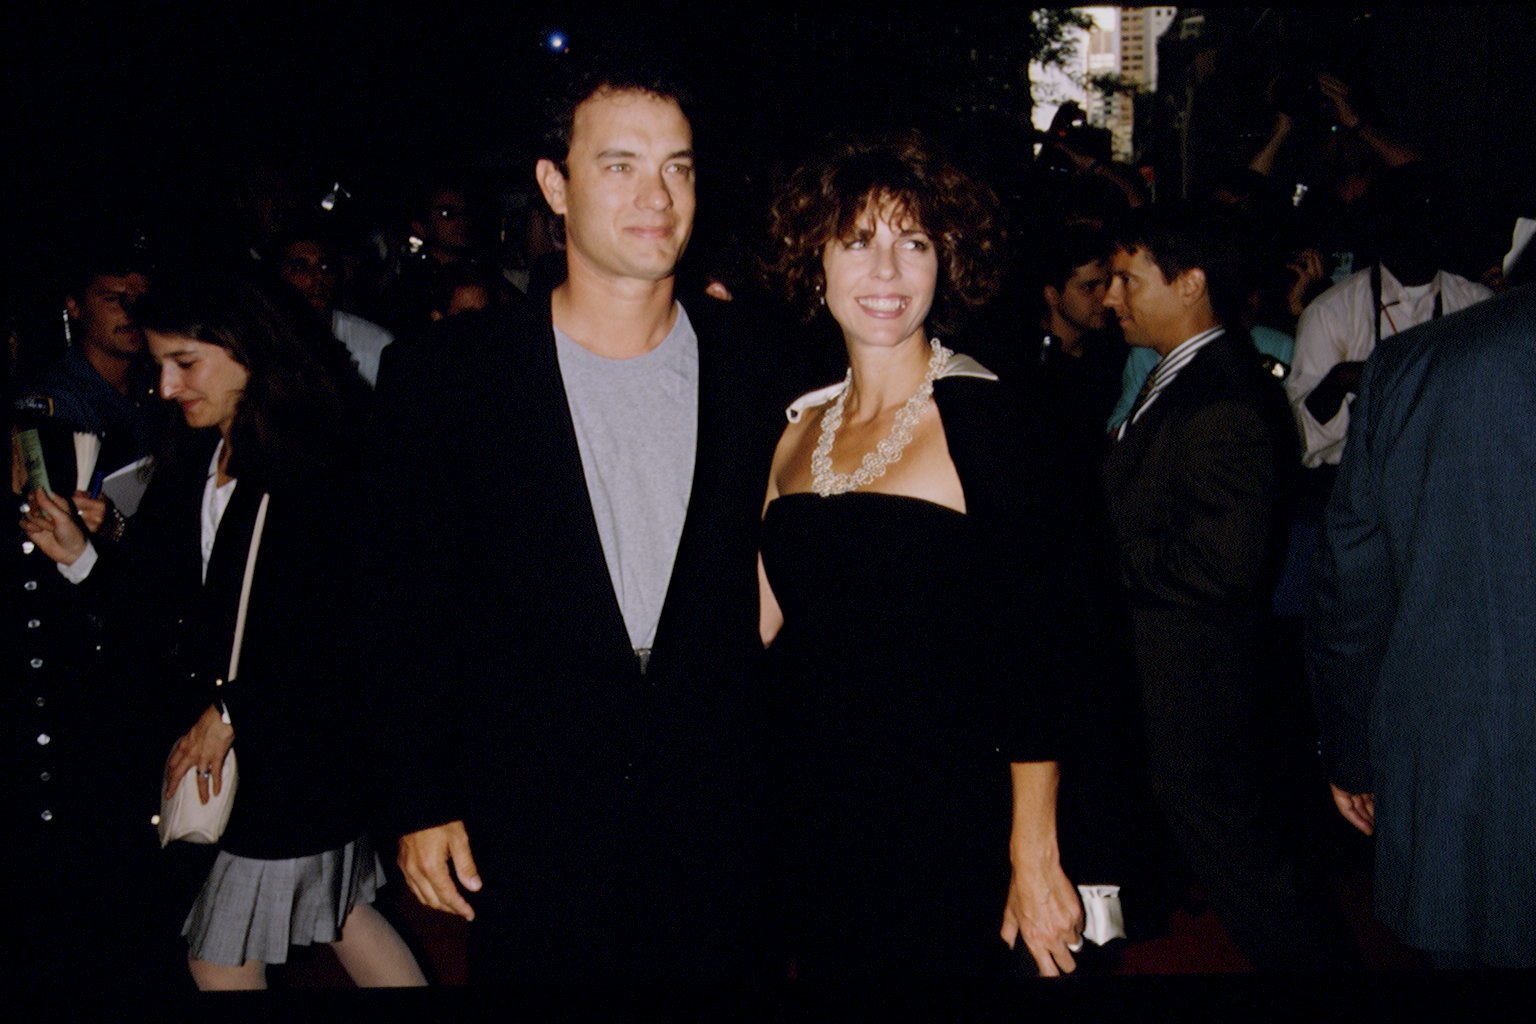 A League of Their Own premiere: Tom Hanks and Rita Wilson arrive